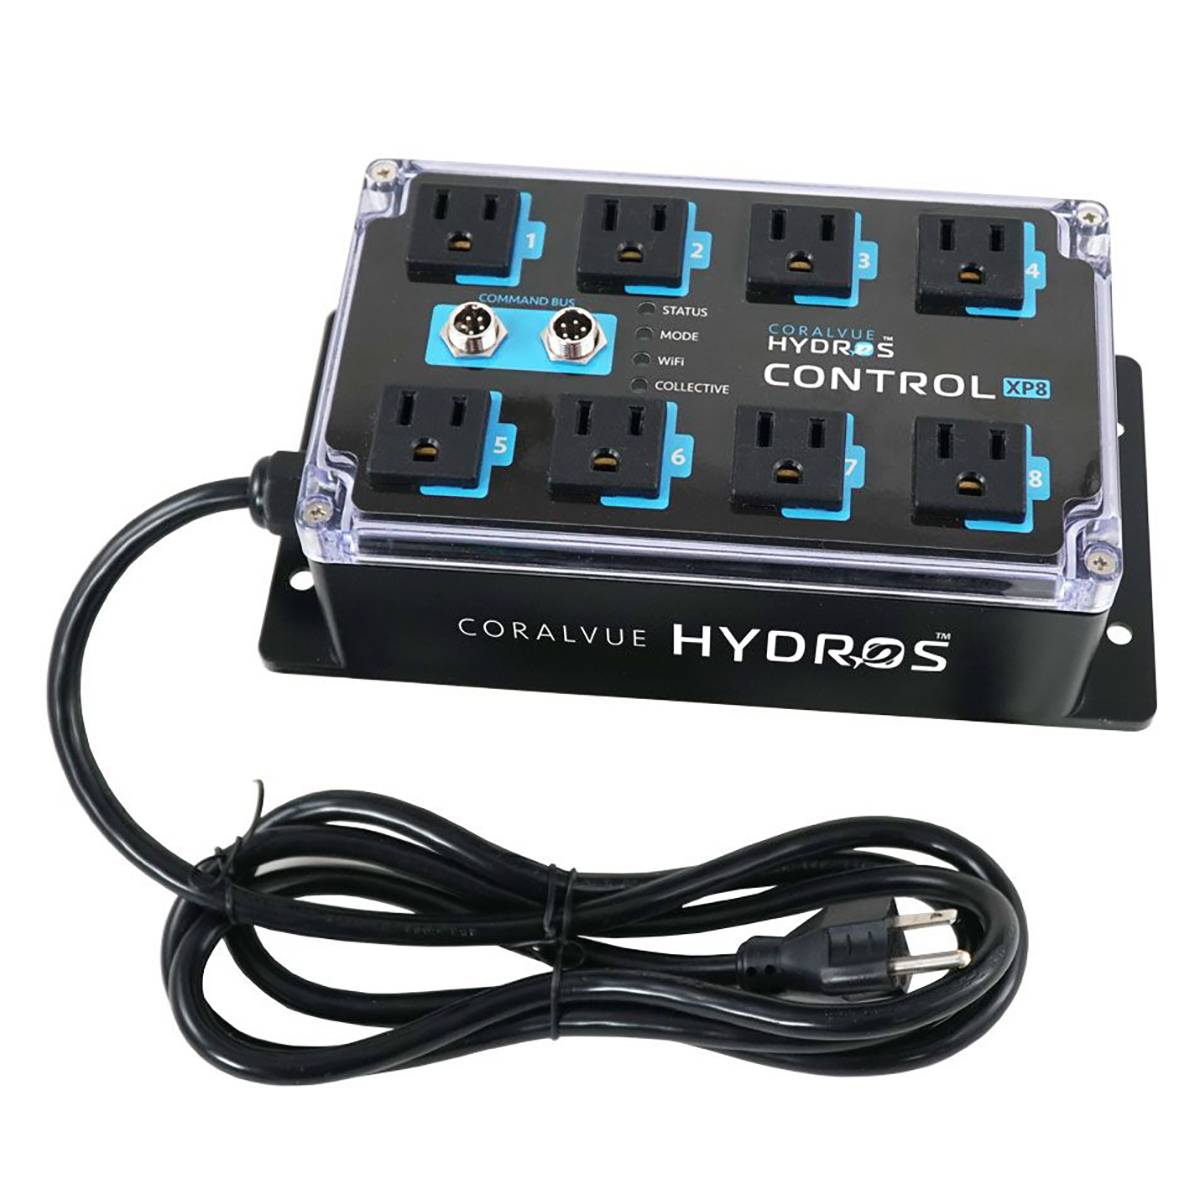 Hydros Control XP8 Energy Bar Aquarium Controller - CoralVue